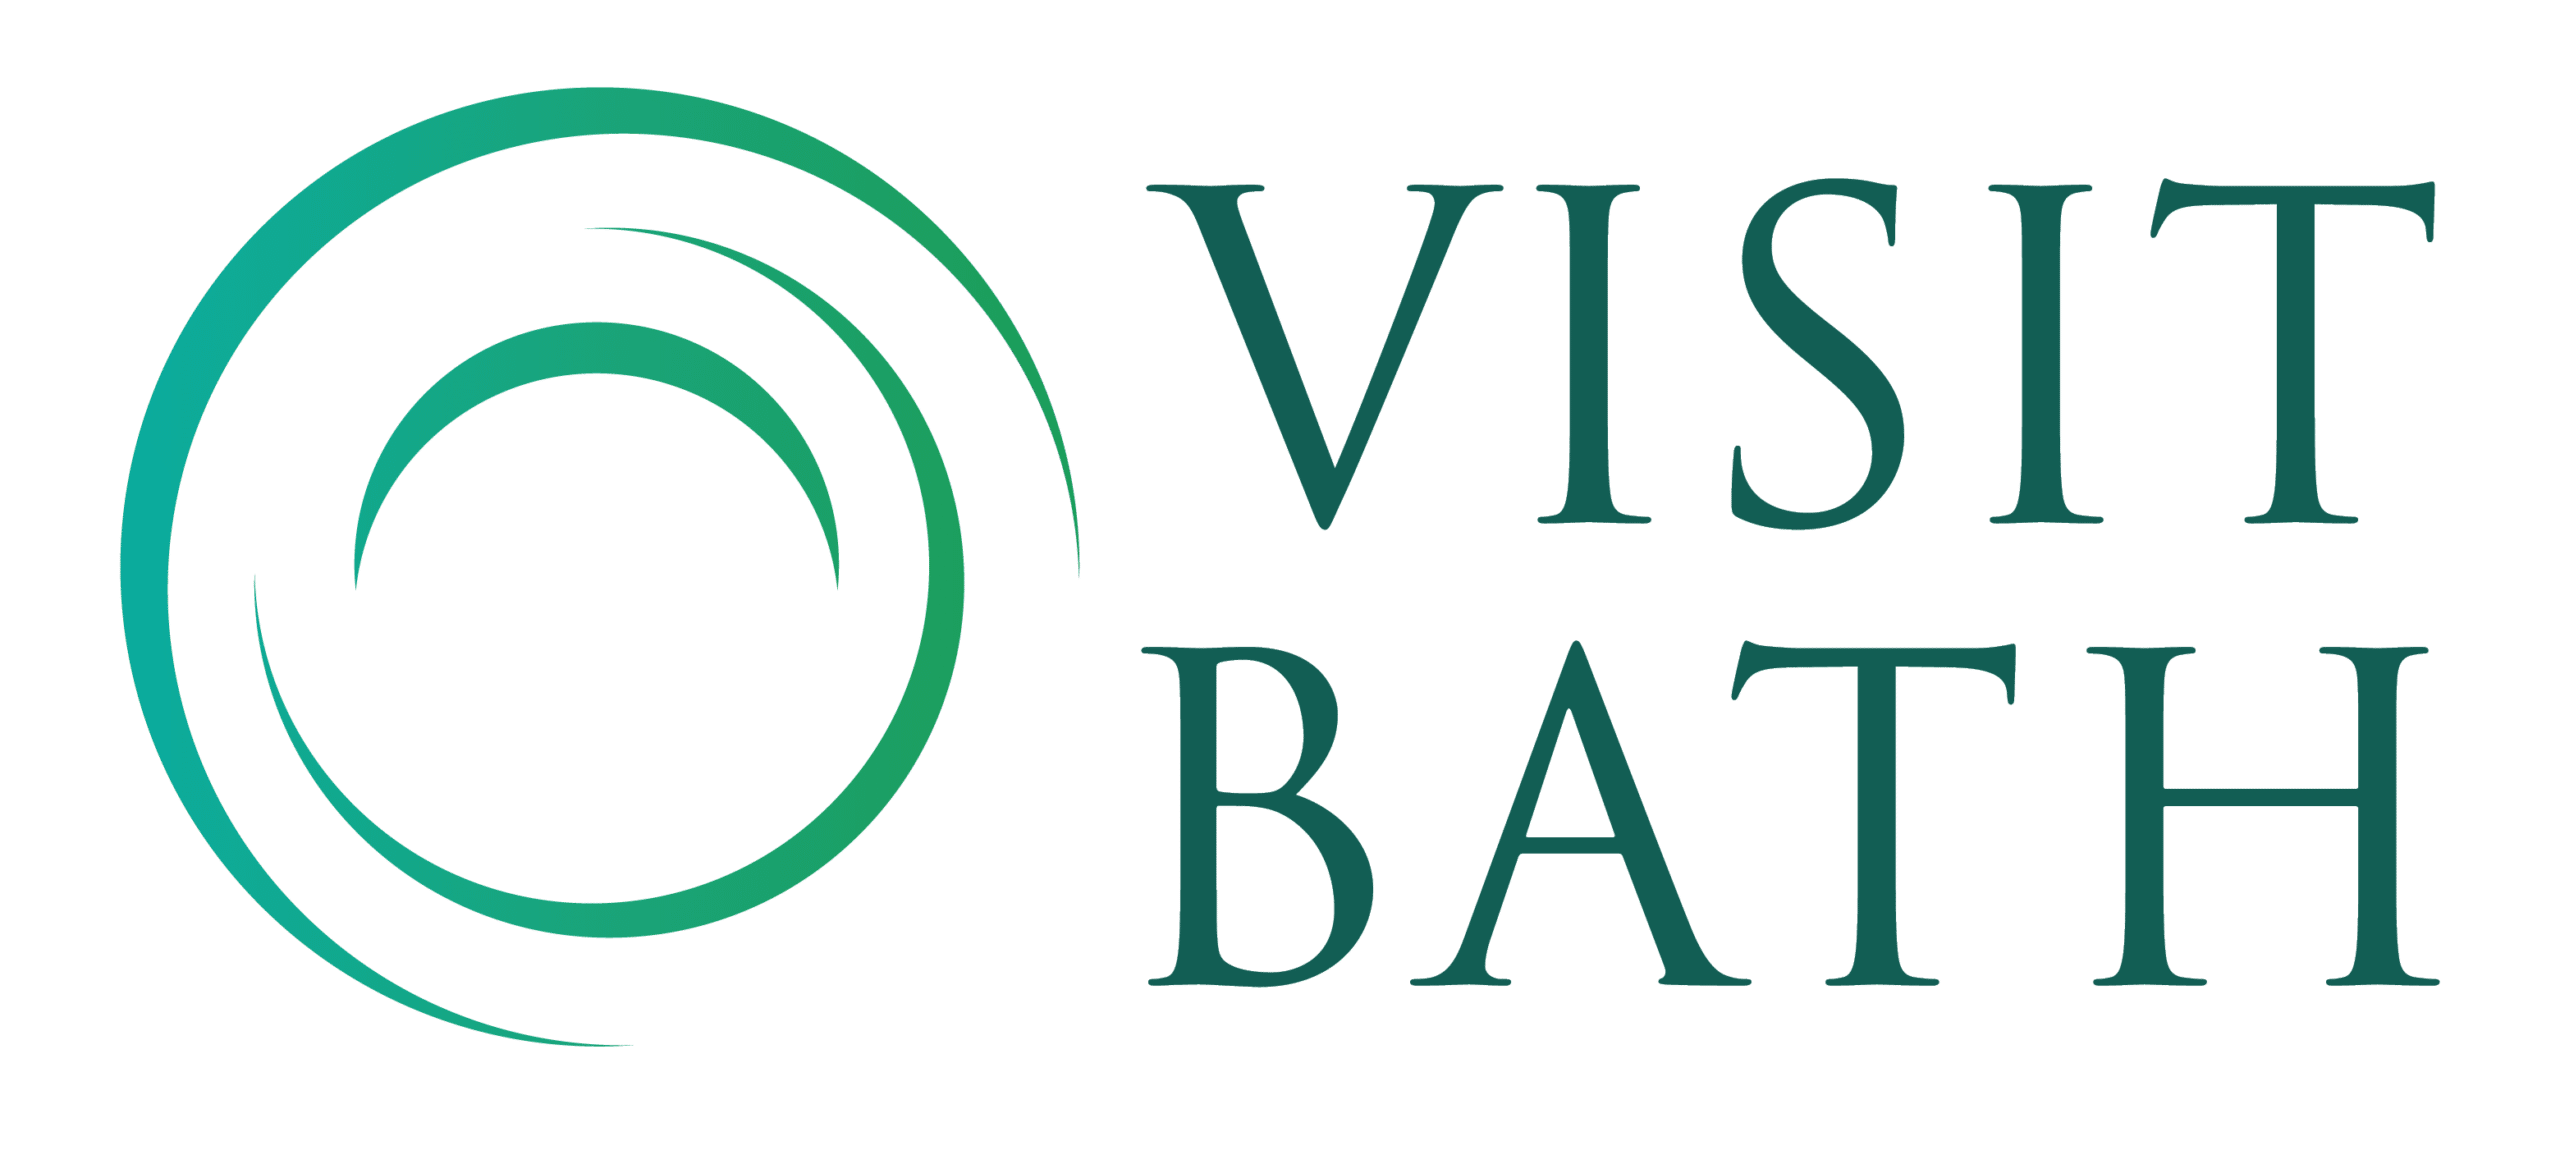 Visit Bath Logo CMYK rectangle